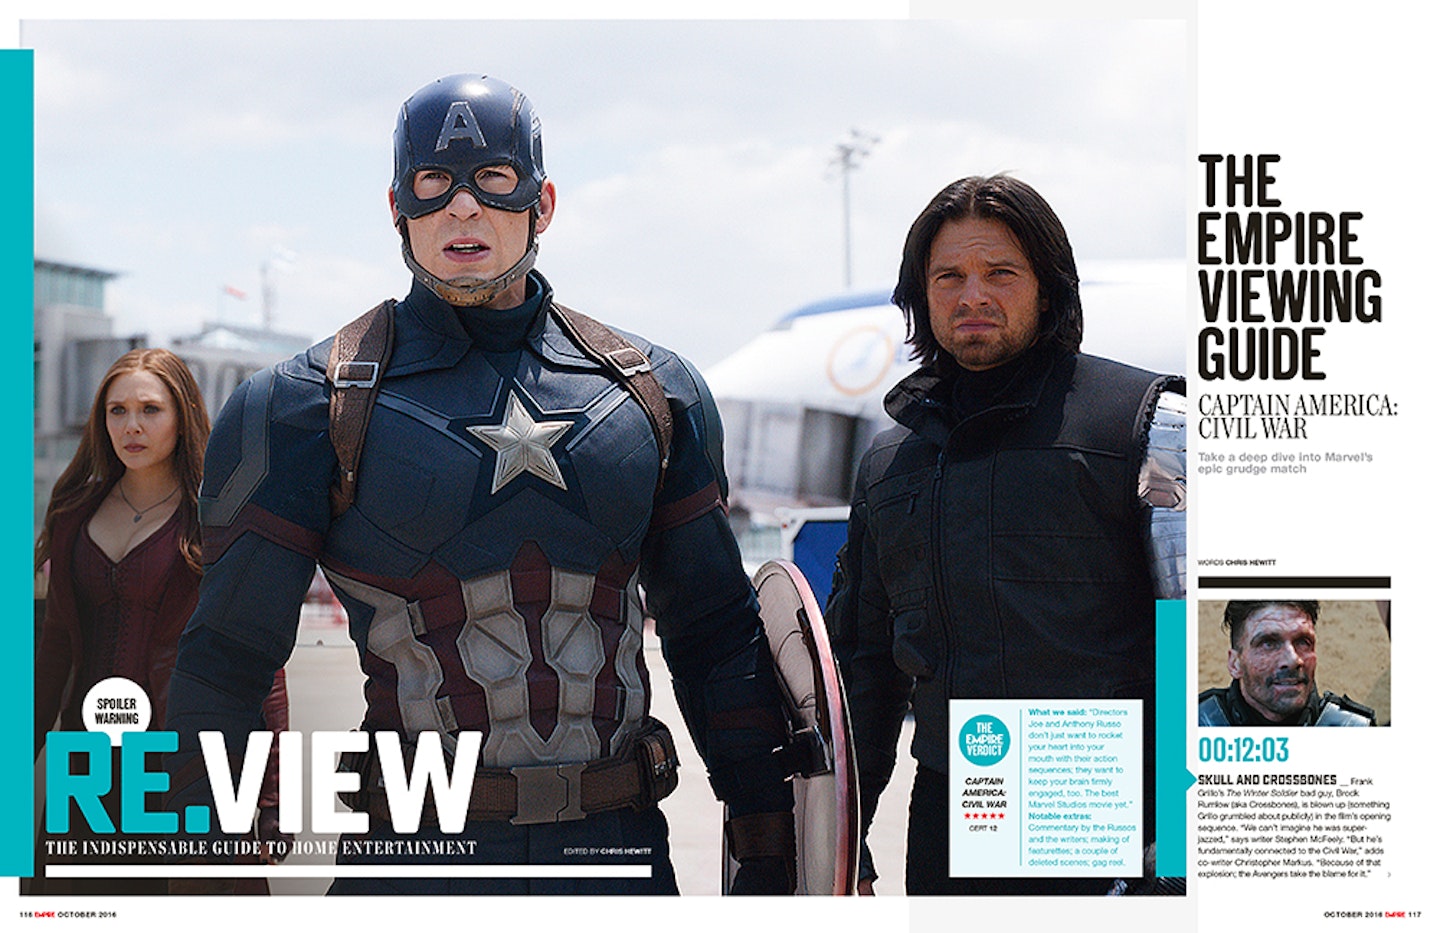 Captain America: Civil War leads off Re.View